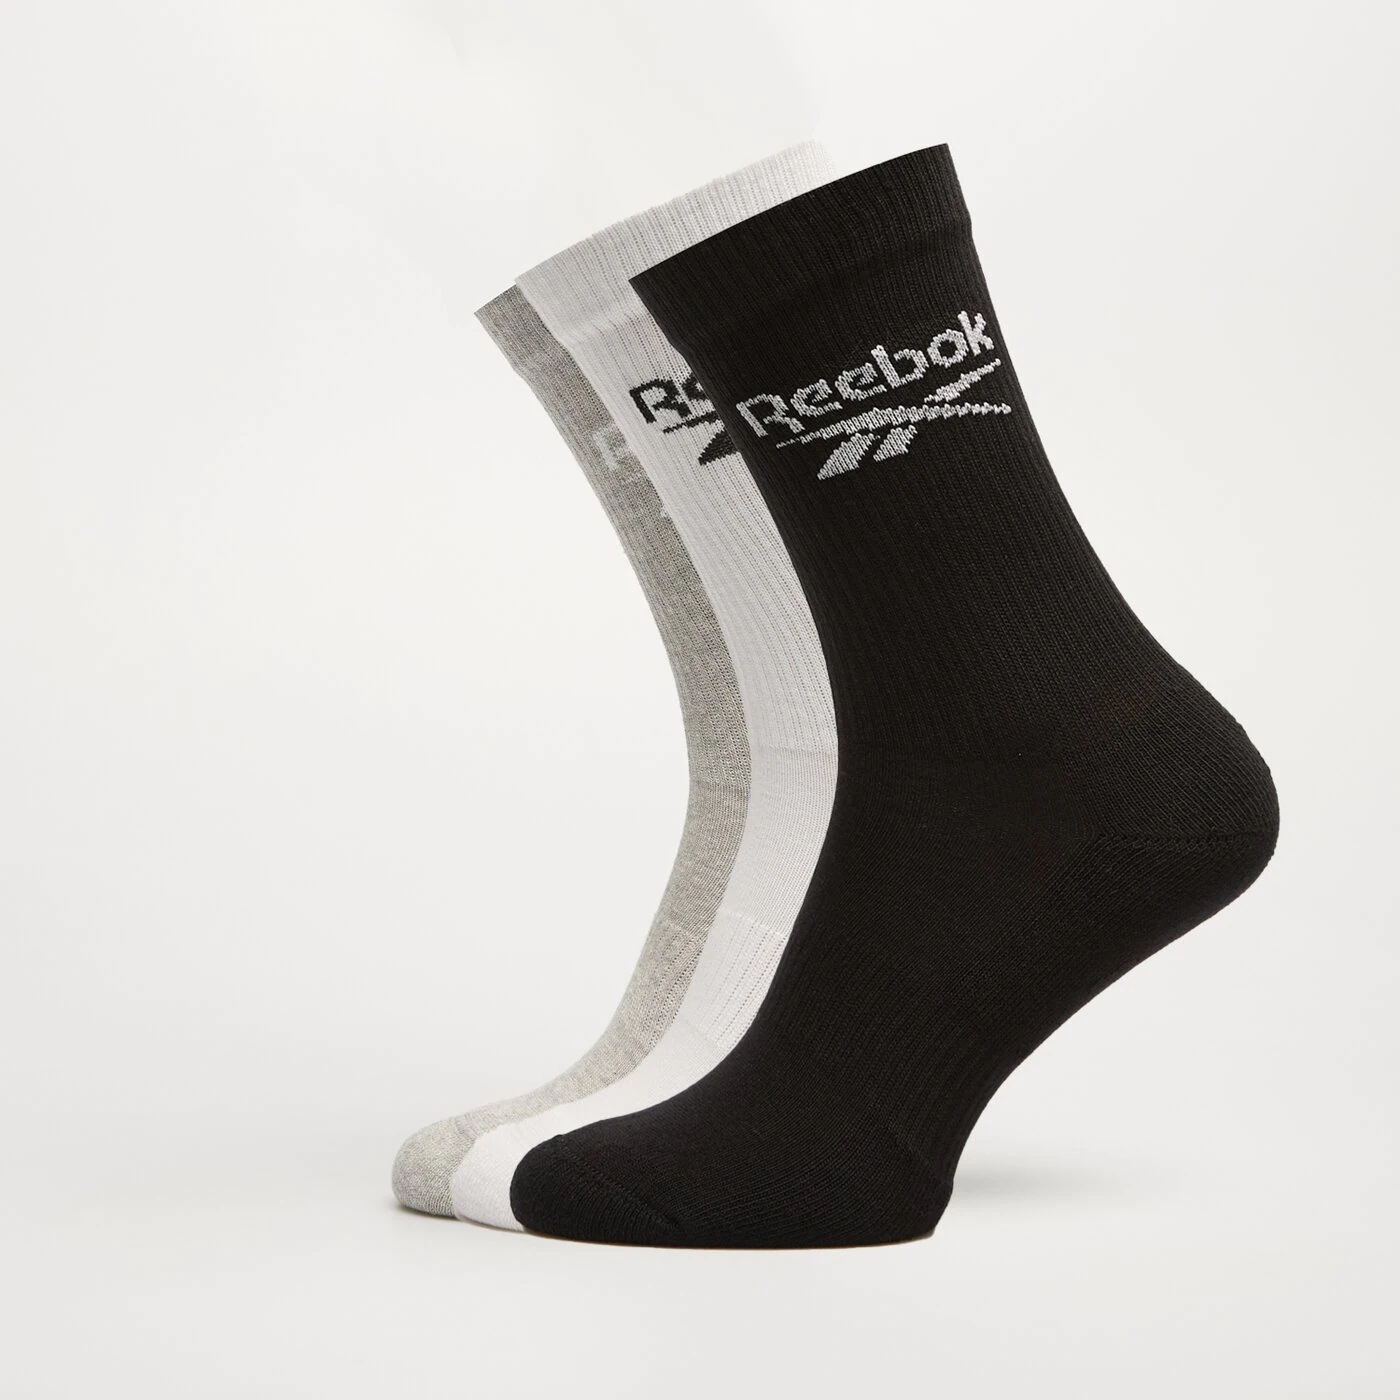 Носки длинные Reebok, 3 пары, серый / черный / белый носки длинные с 1108 цвет белый черный серый размер 23 25 3 пары